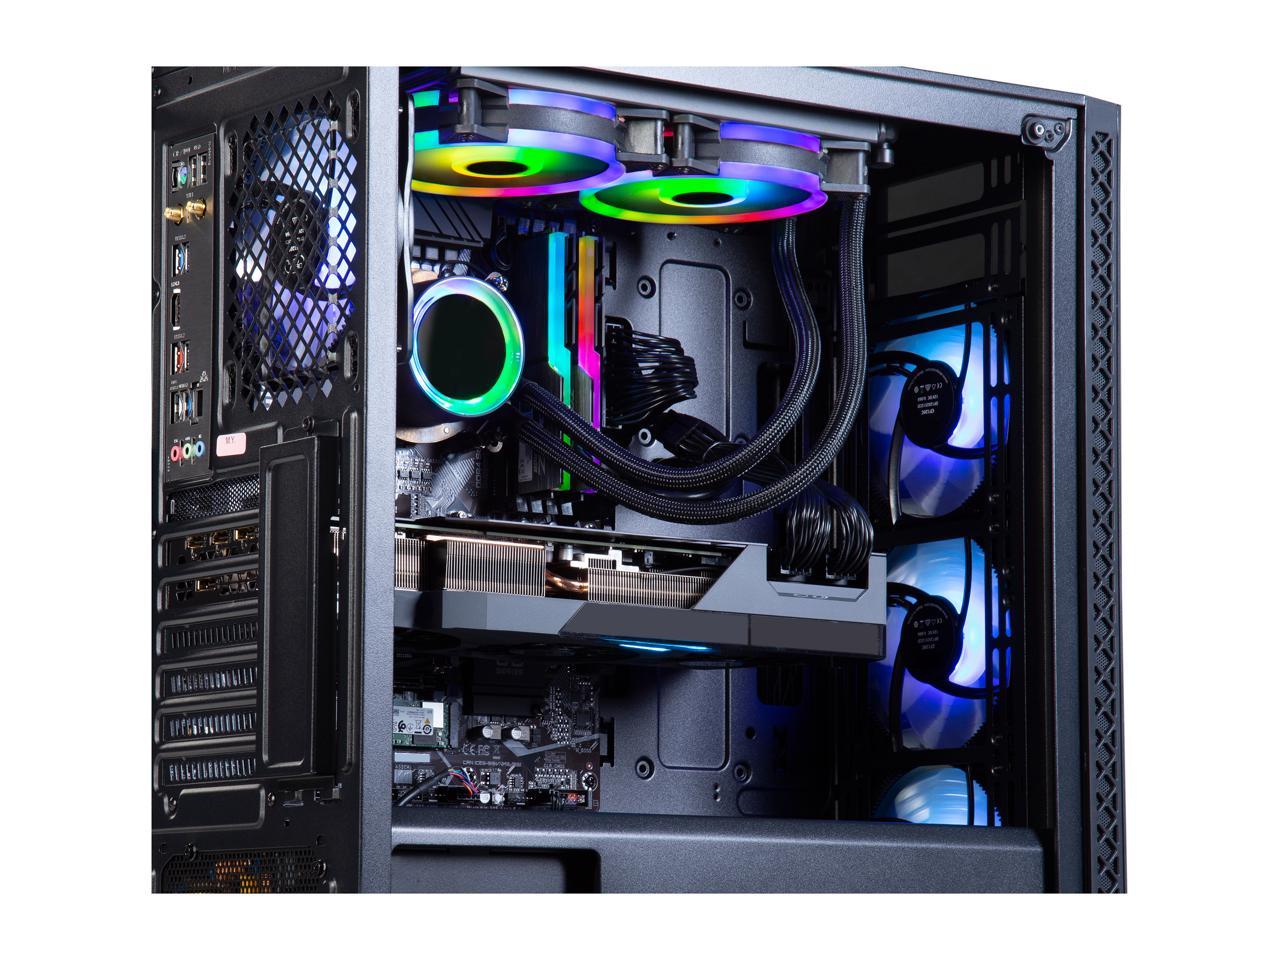 ABS Gladiator Gaming PC - Intel i9-10850K - GeForce RTX 3080 - G.Skill TridentZ RGB 32GB DDR4 3200MHz - 1TB M.2 NVMe SSD